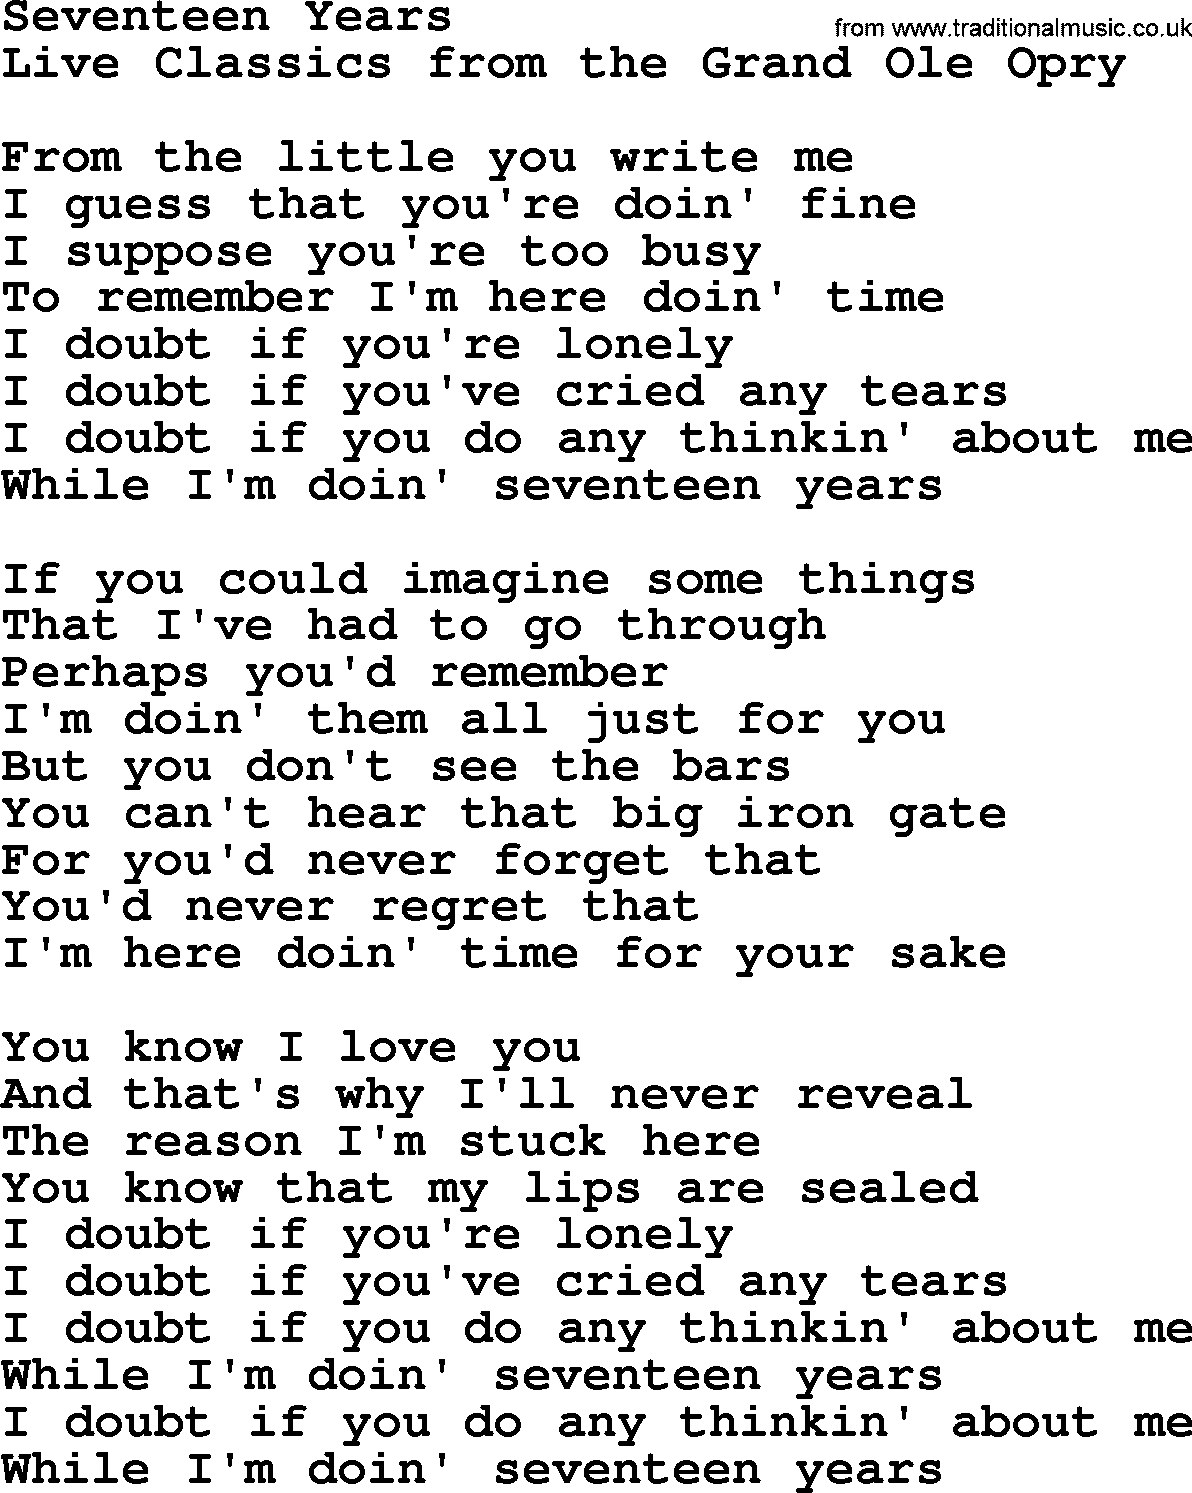 Marty Robbins song: Seventeen Years, lyrics